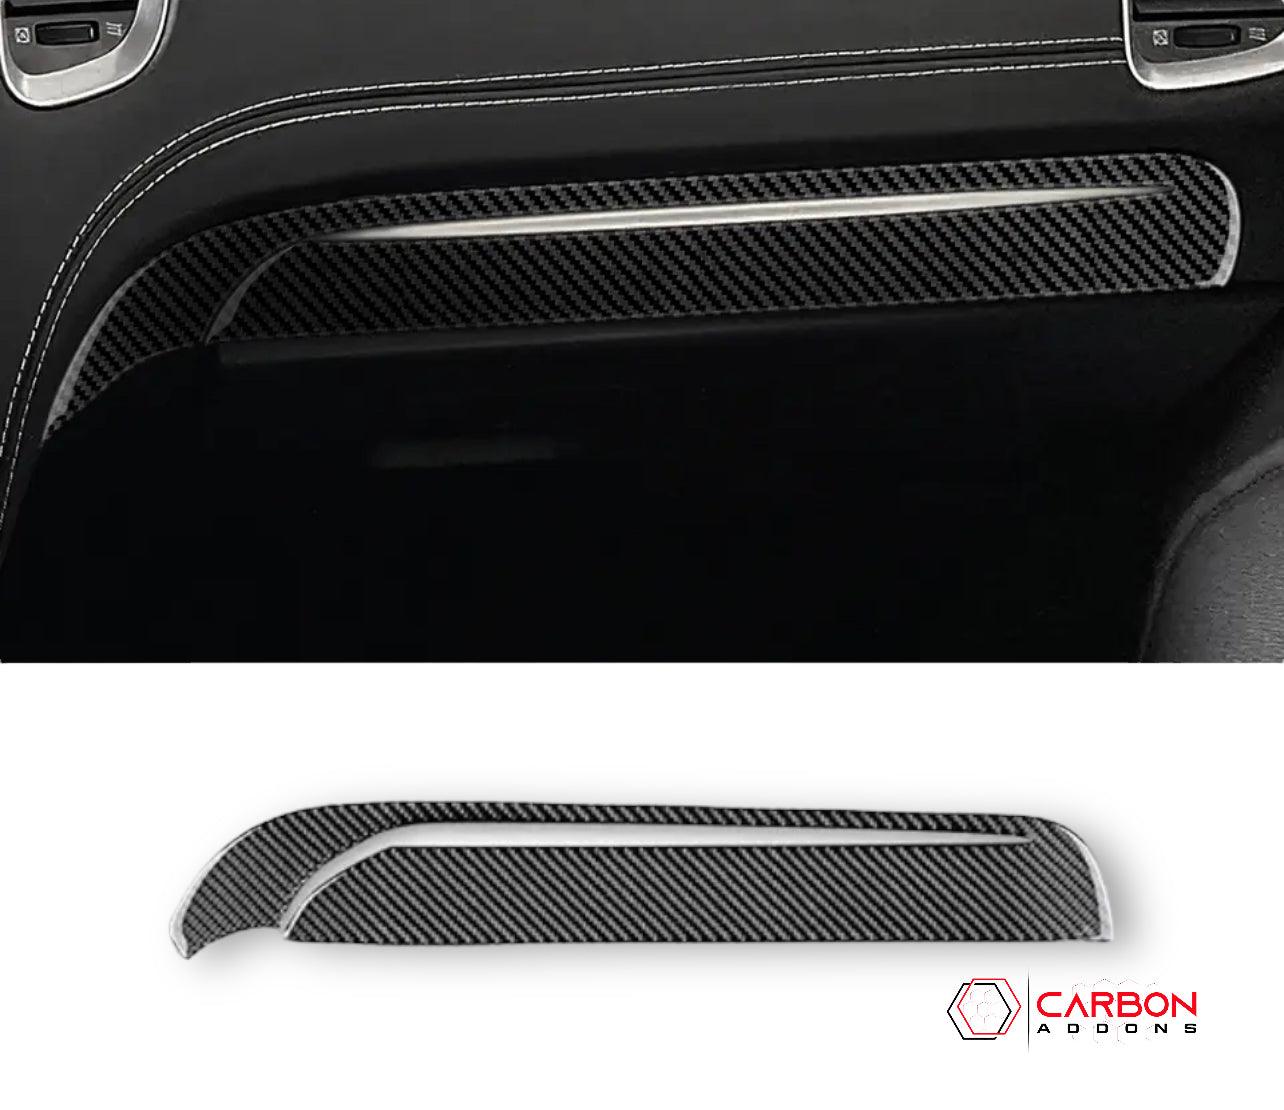 Real Carbon Fiber Glove Box Trim Overlay for 2011-2020 Dodge Durango - carbonaddons Carbon Fiber Parts, Accessories, Upgrades, Mods